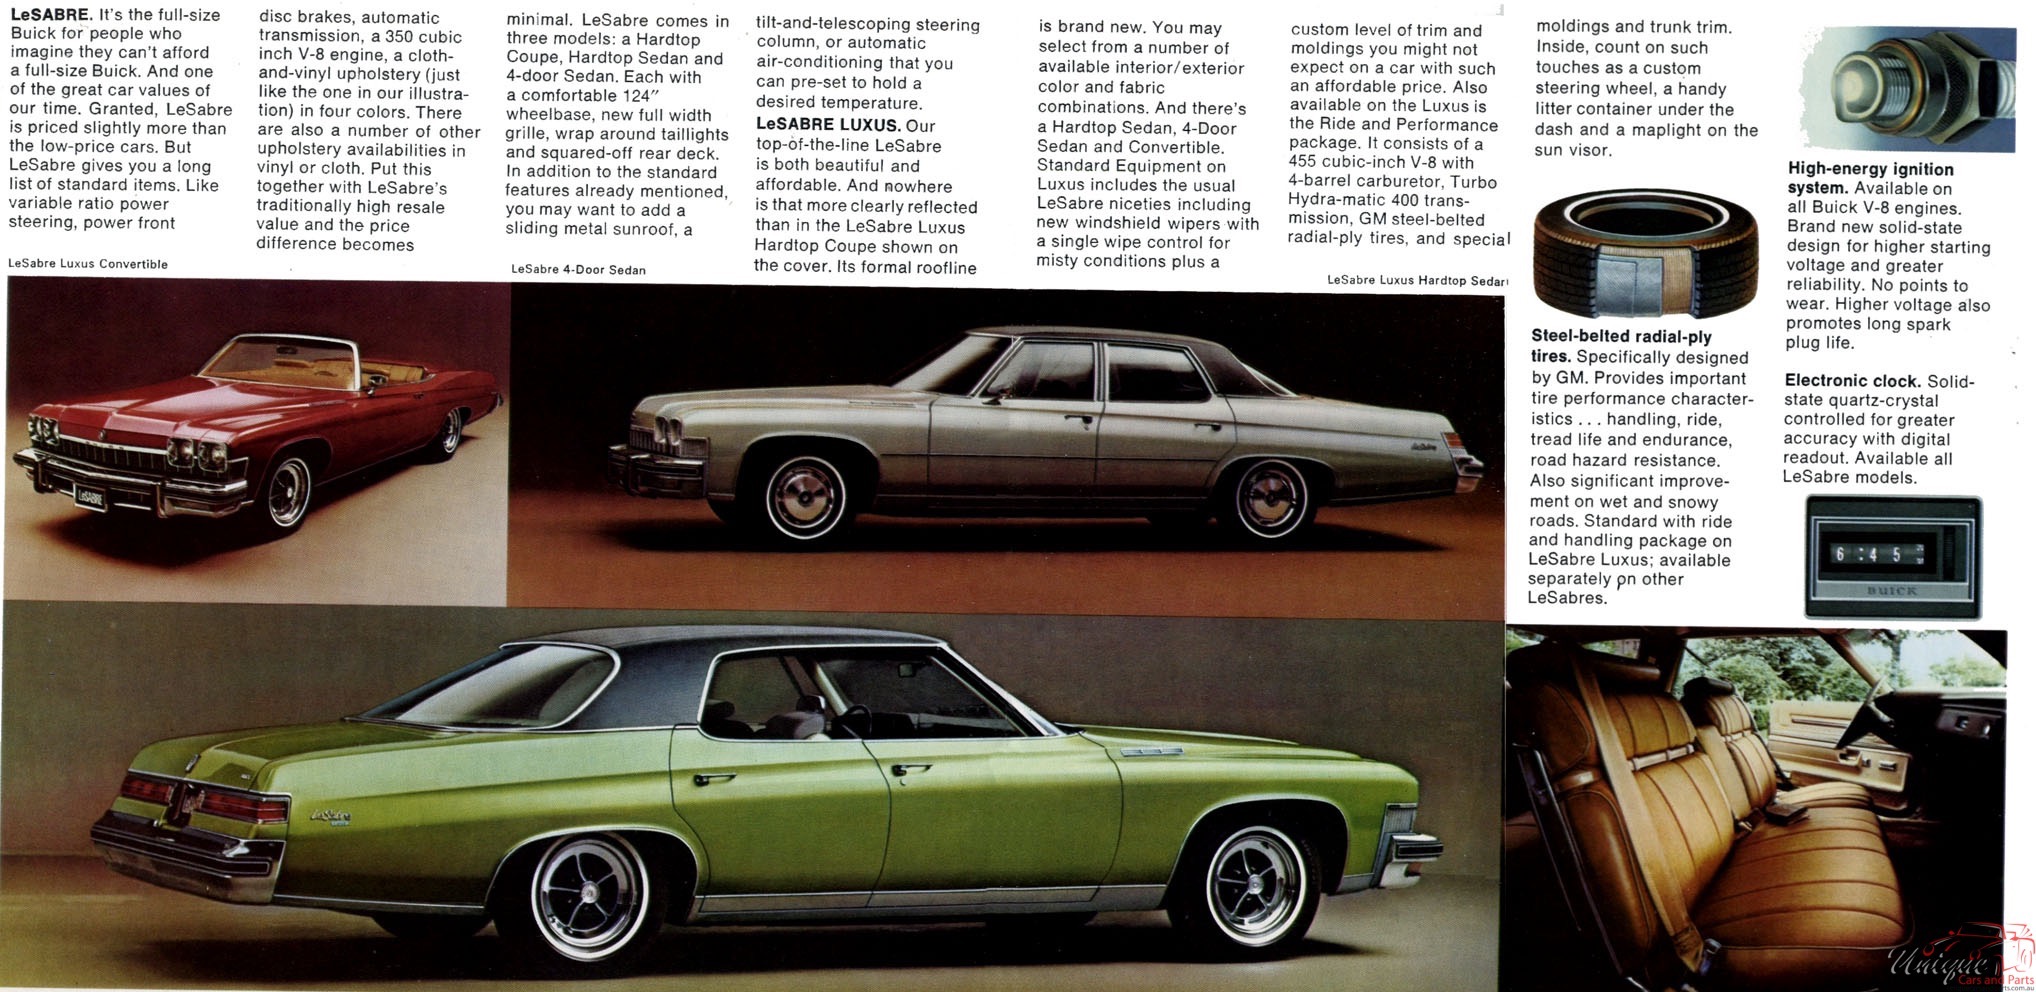 1974 Buick LeSabre Folder Page 1